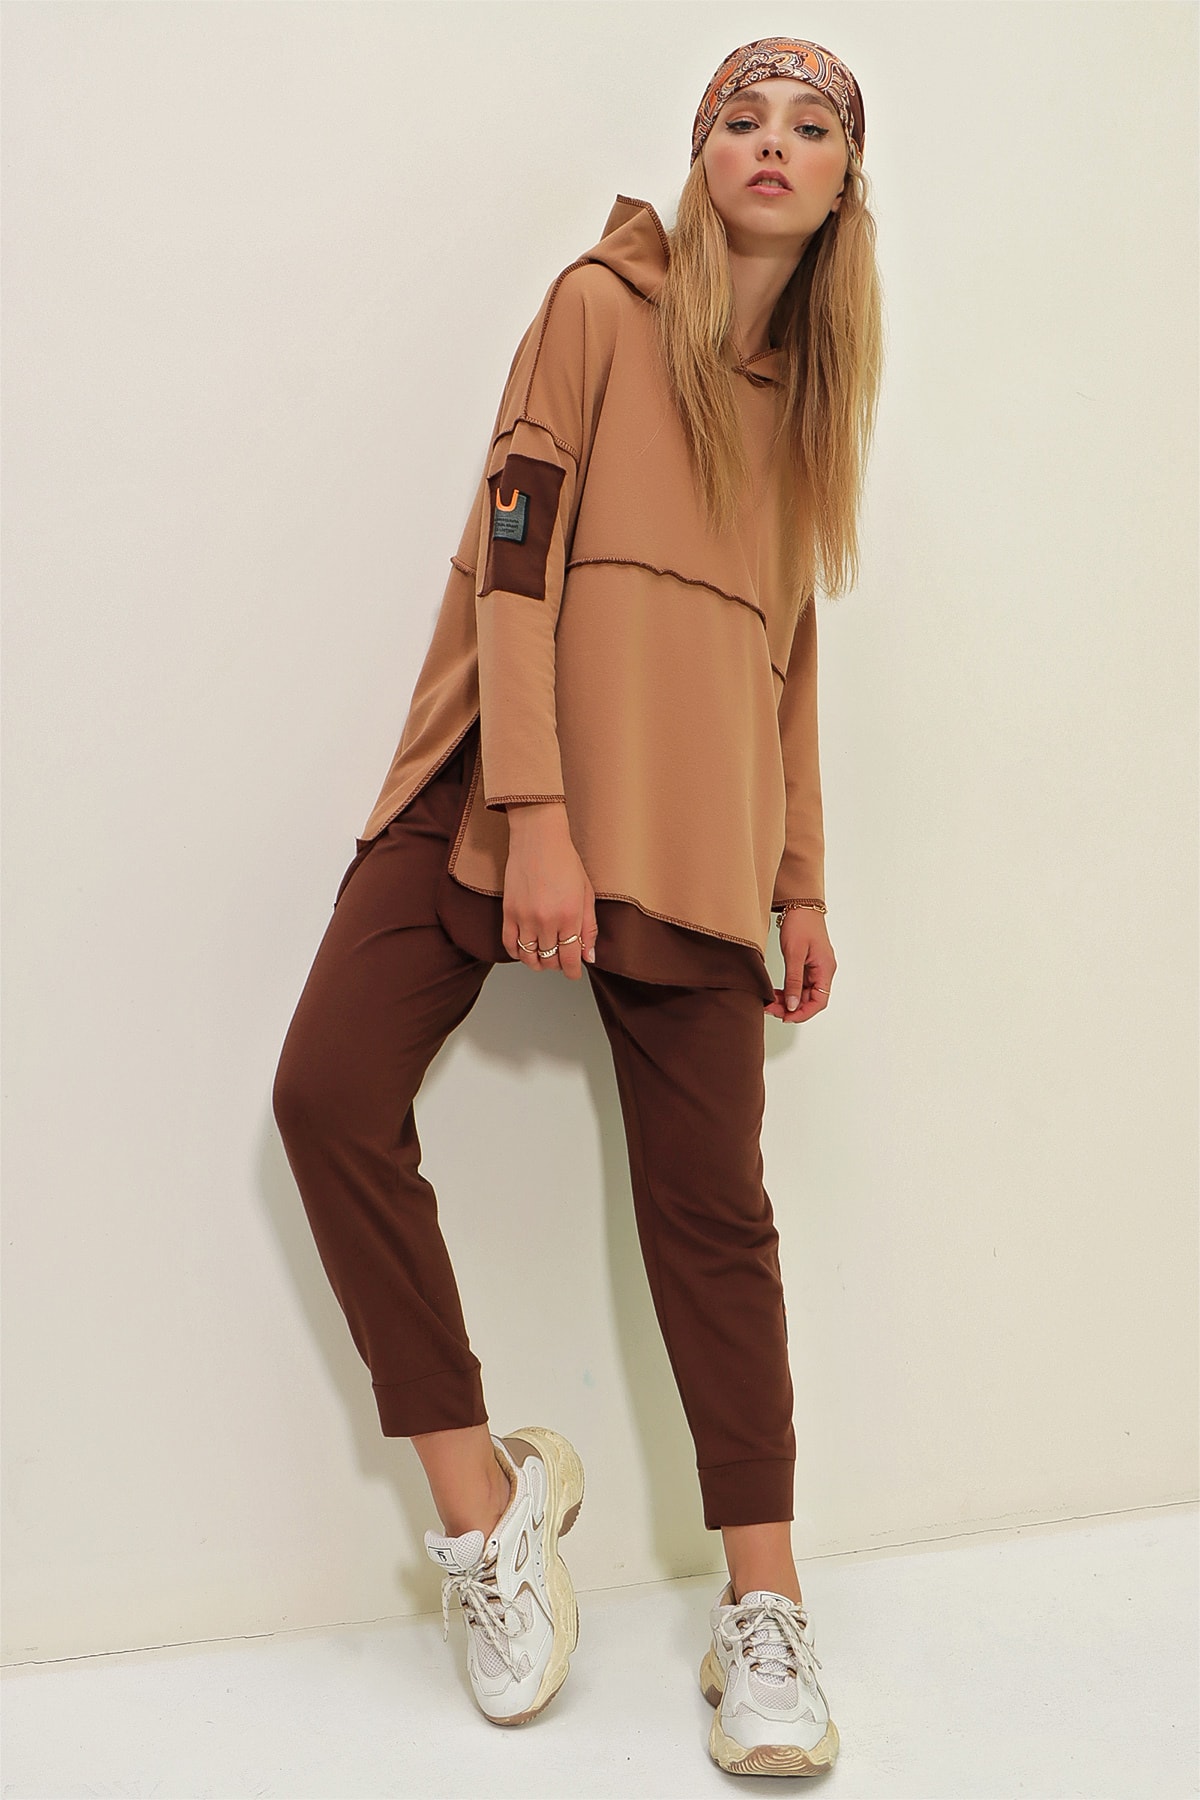 Trend Alaçatı Stili Women's Camel Tiered Hooded Sweatshirt And Sweatpants Double Suit